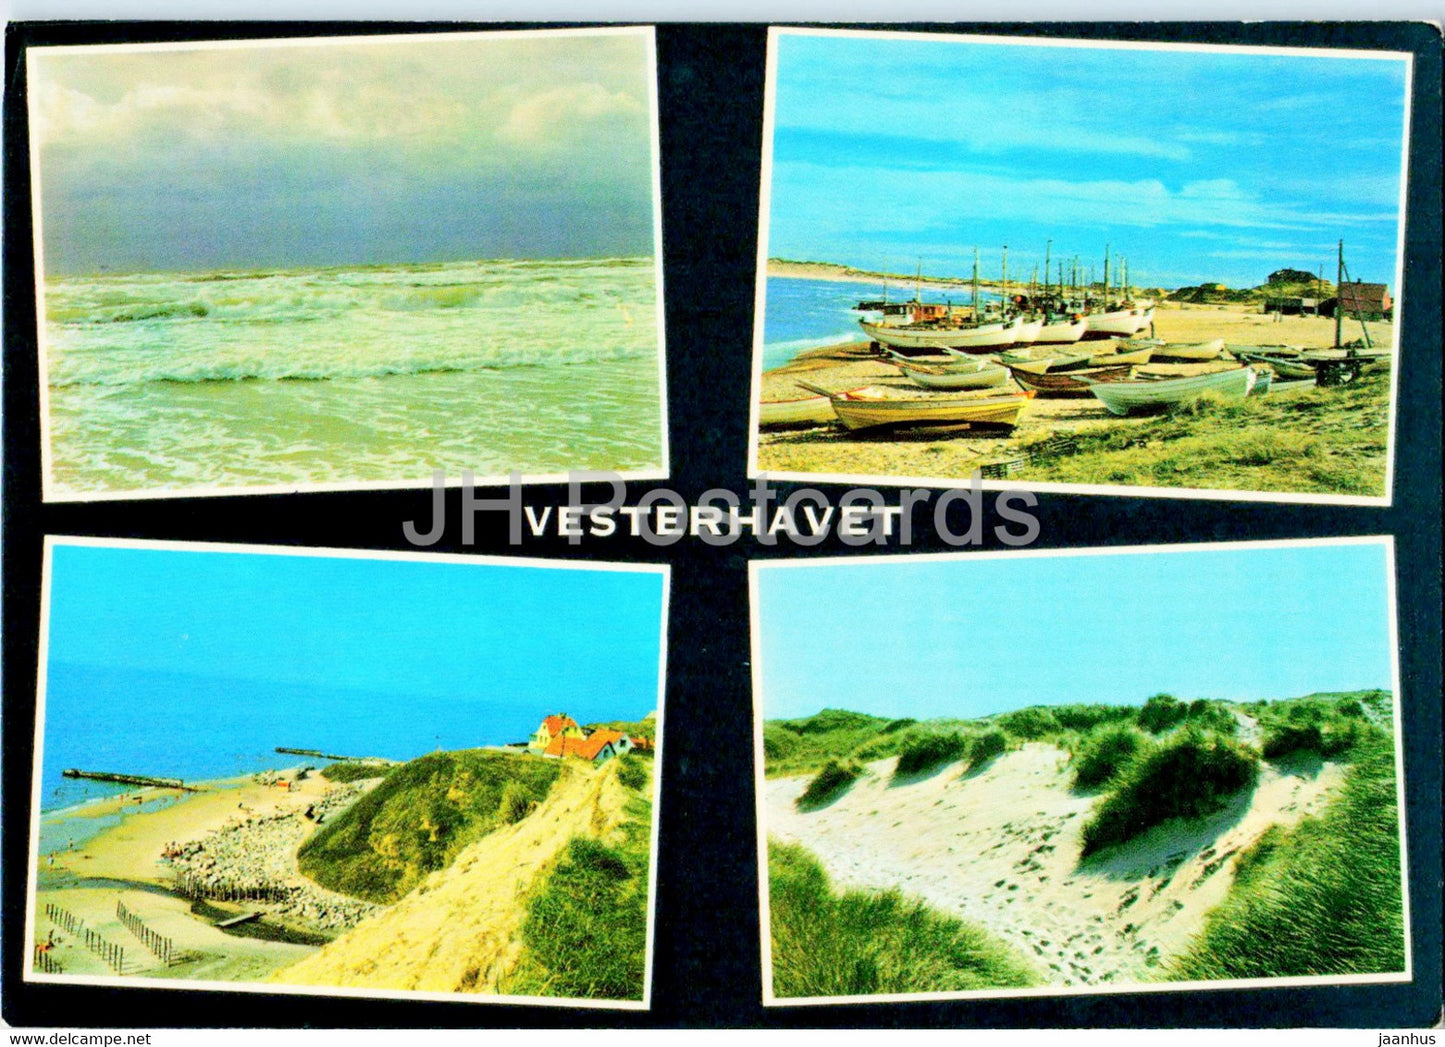 Vesterhavet - The North Sea - boat - beach - multiview - 1974 - Denmark - used - JH Postcards